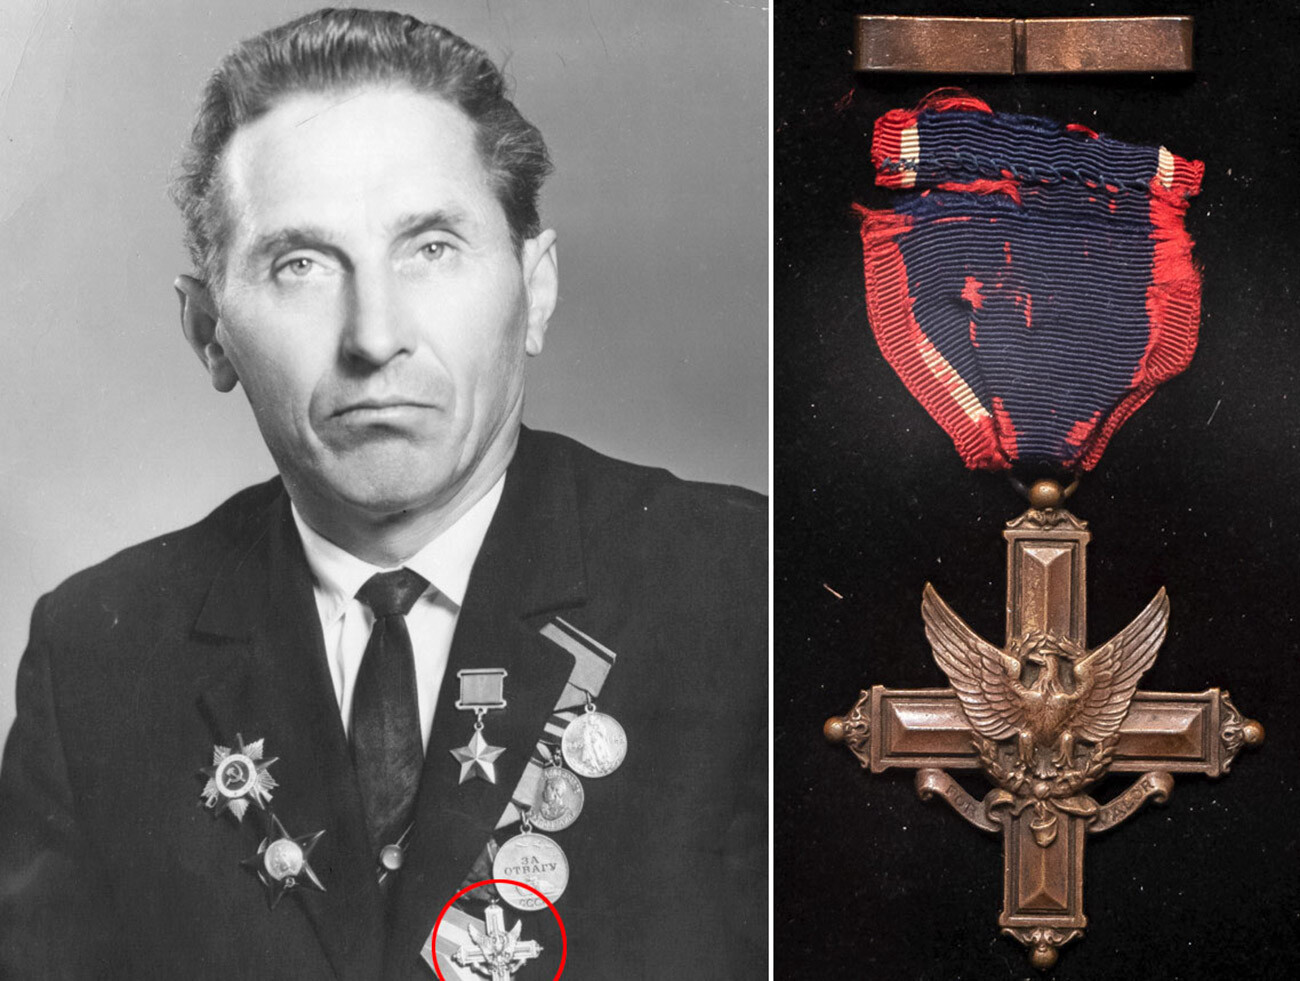 Oberfeldwebel Fjodor Trofimow/Das Distinguished Service Cross.
